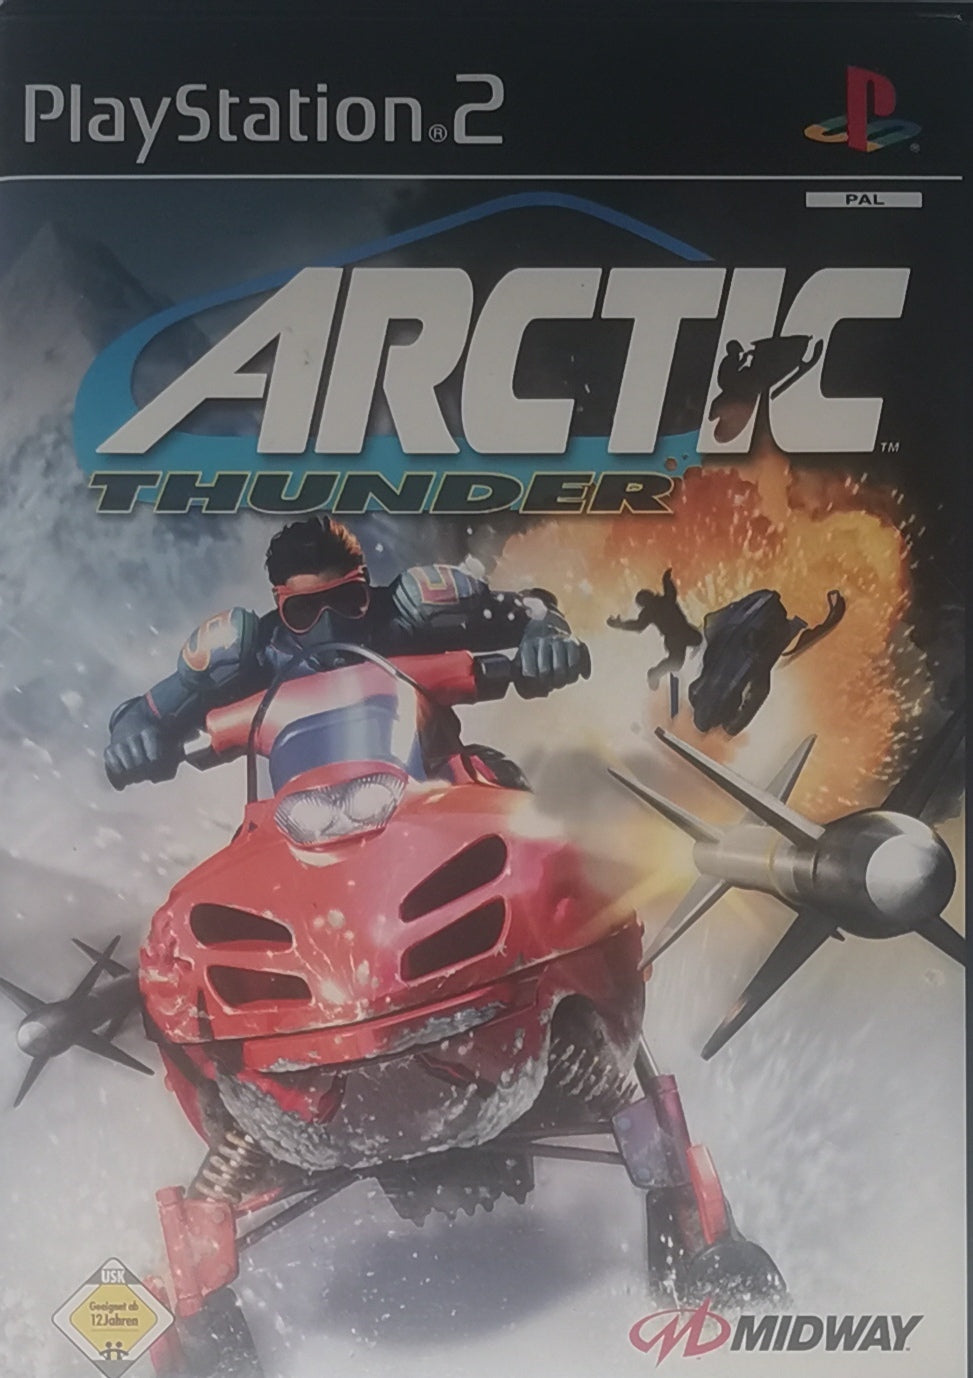 Arctic Thunder PS2 (Playstation 2) [Gut]